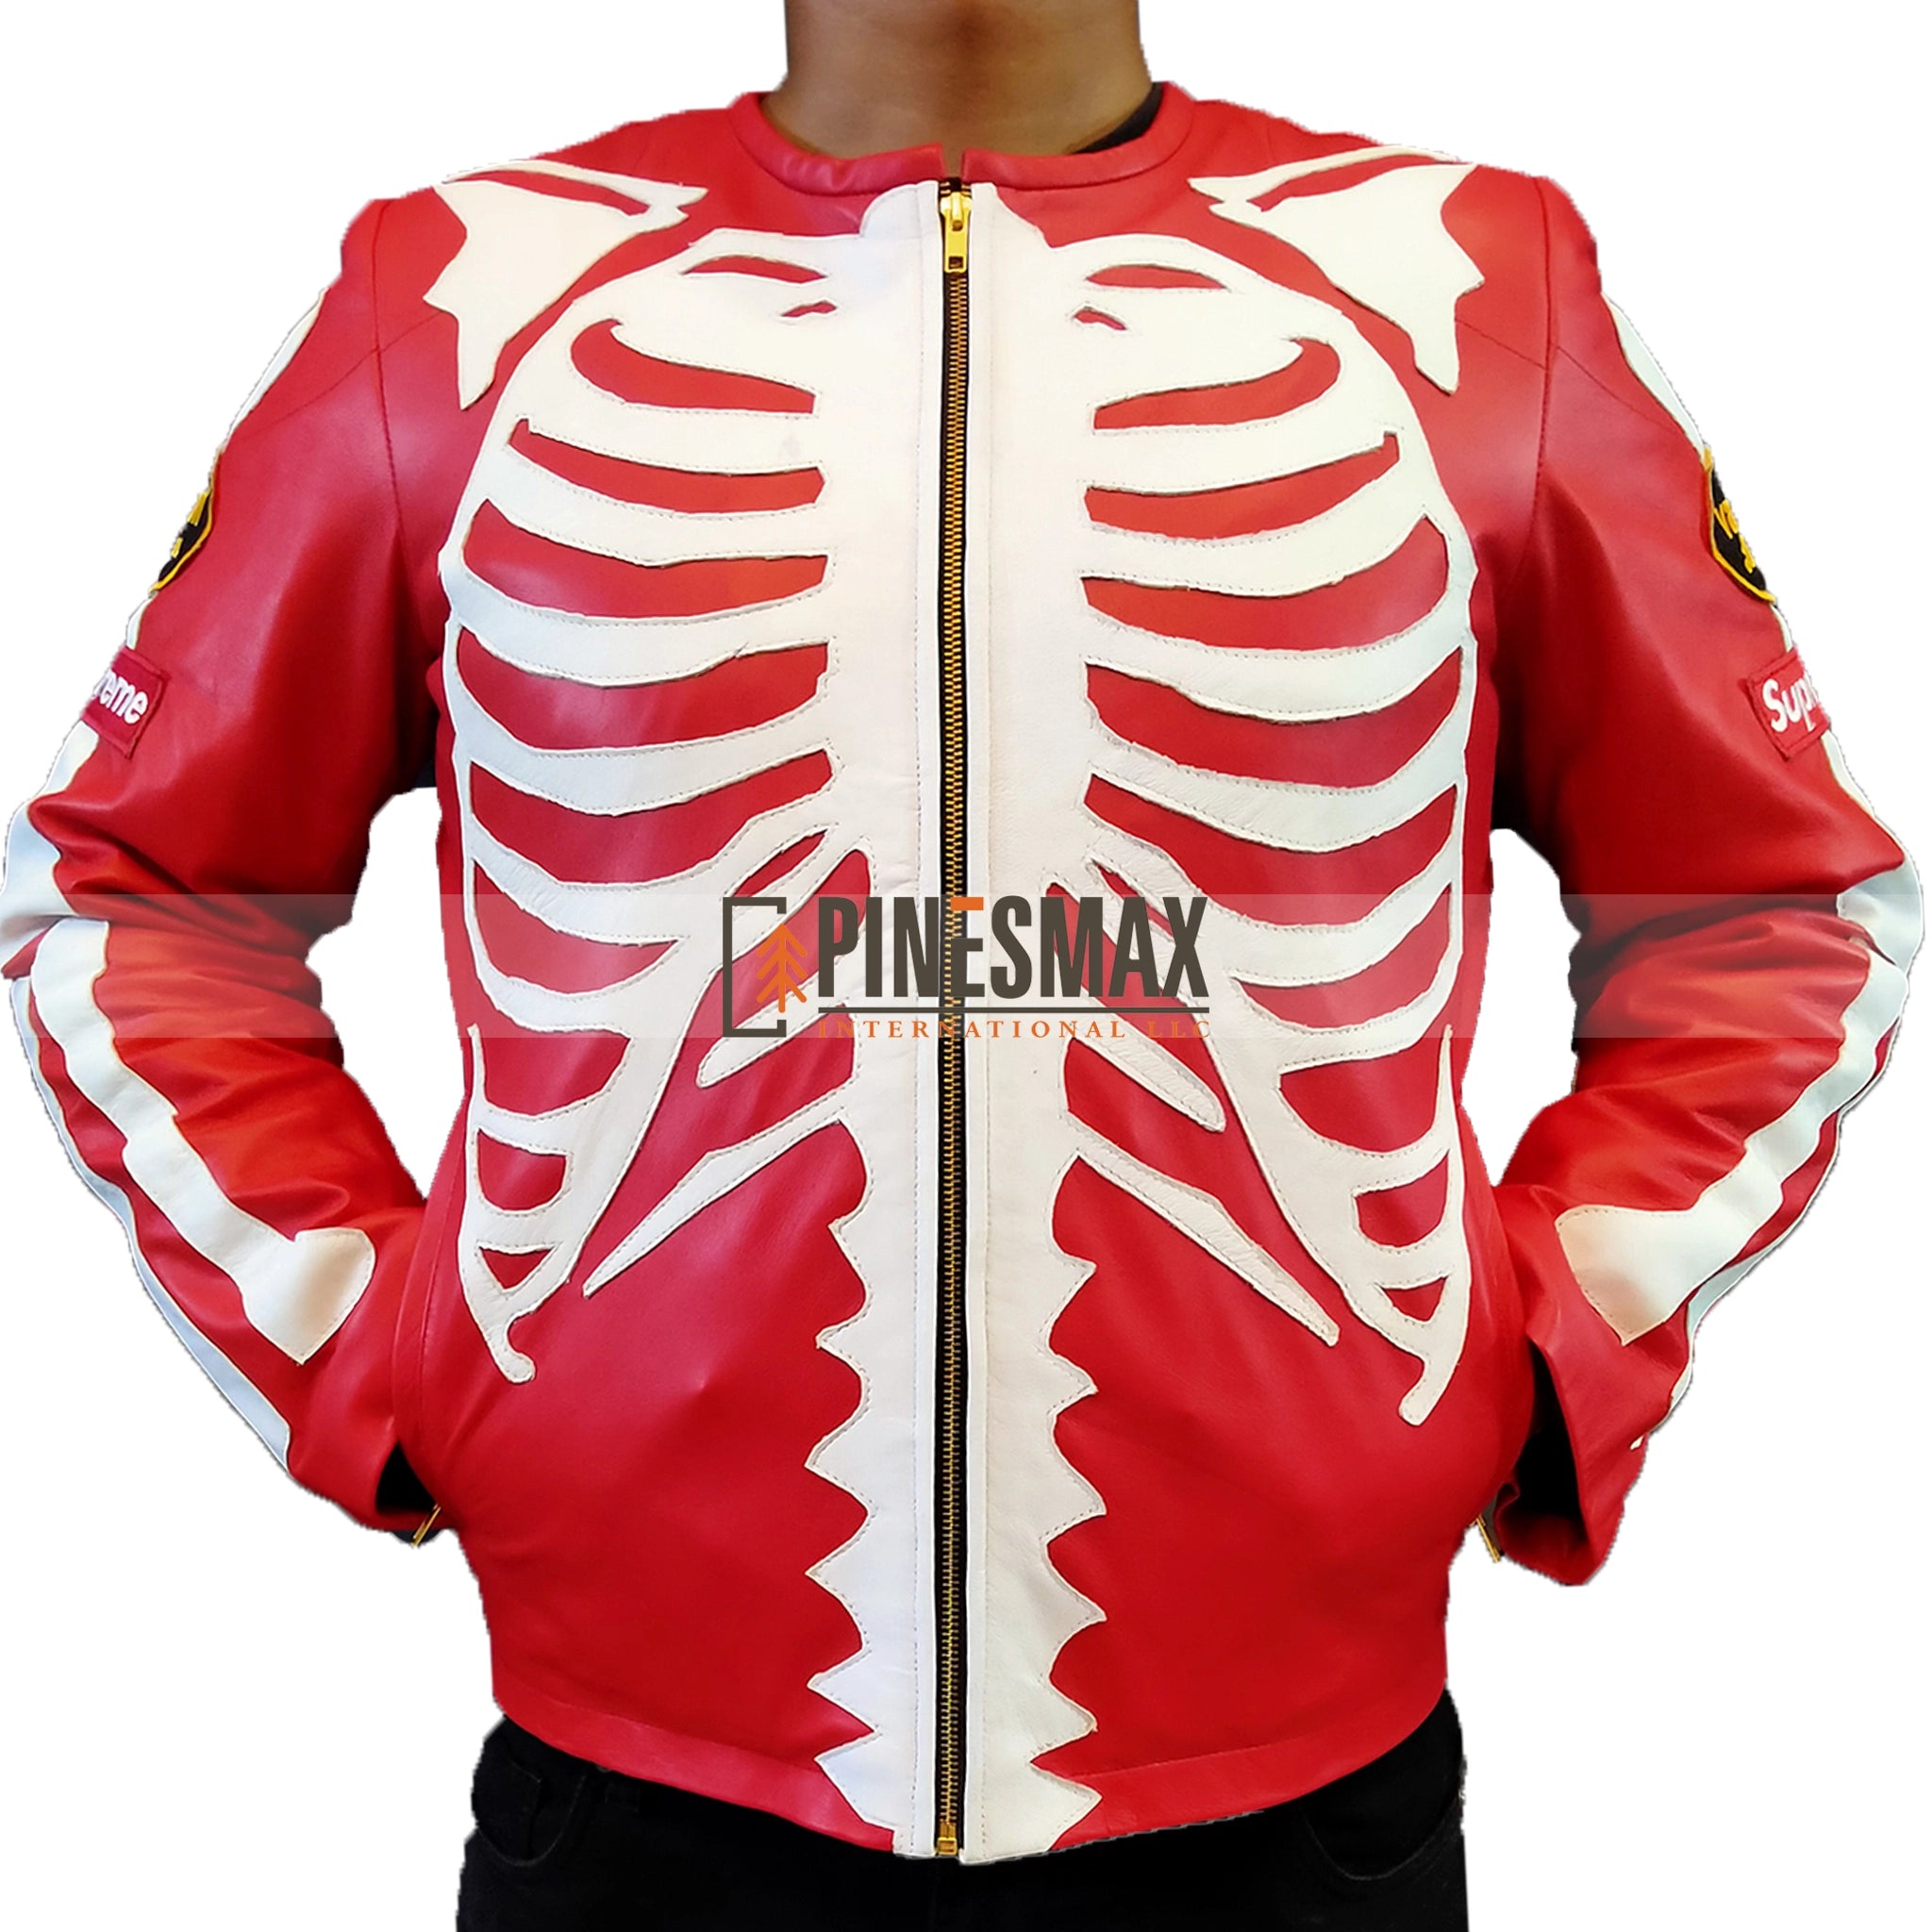 Red Skeleton Vanson Leather Jacket For Men - PINESMAX